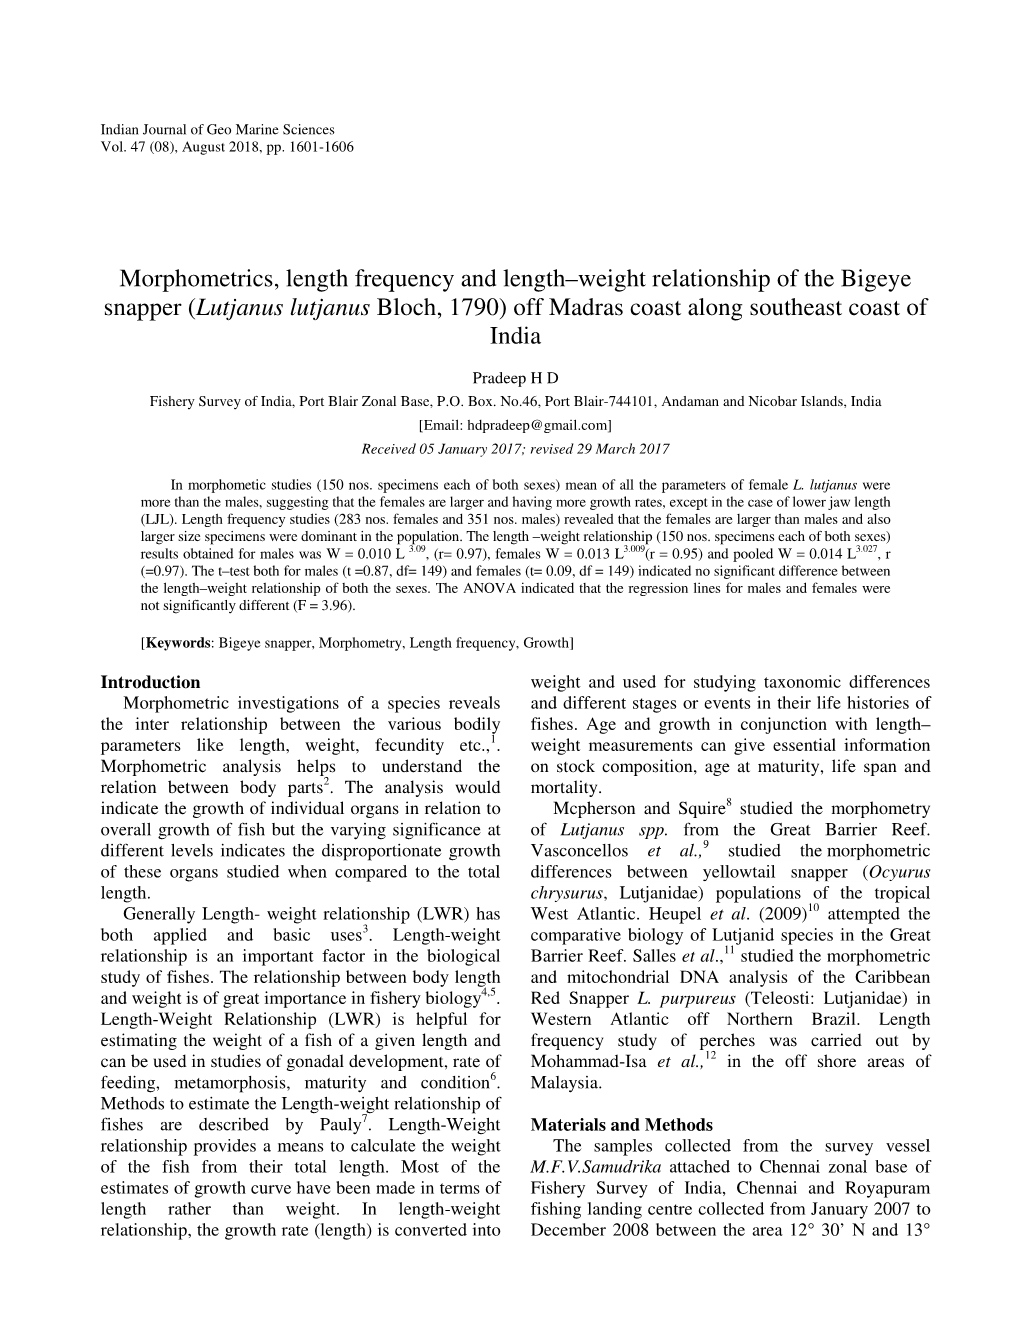 Morphometrics, Length Frequency and Length–Weight Relationship of the Bigeye Snapper ( Lutjanus Lutjanus Bloch, 1790) Off Madras Coast Along Southeast Coast of India